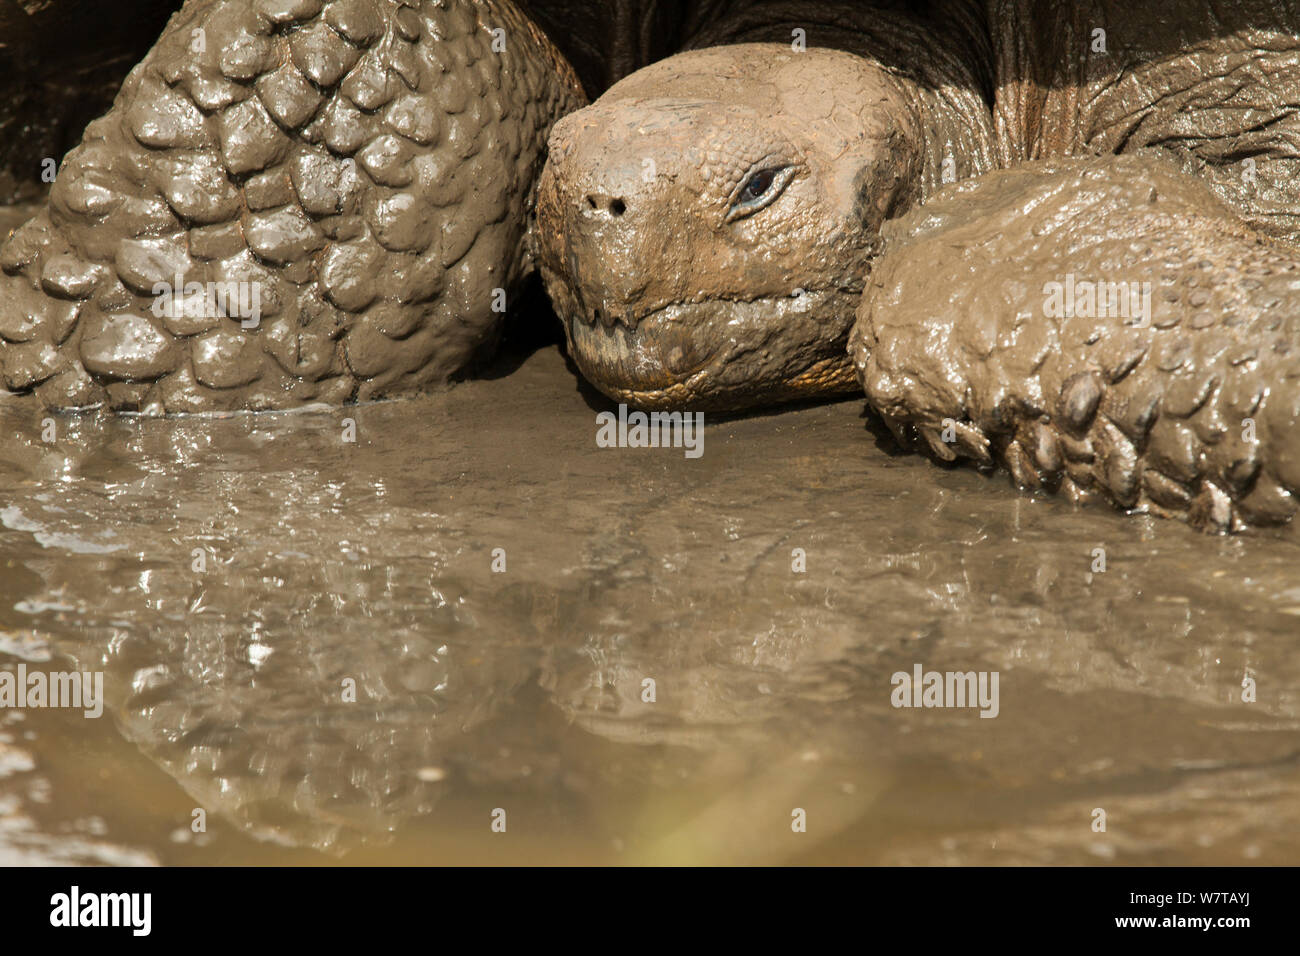 Galapagos giant tortoises, (Chelonoidis nigra) taking mud bath, Galapagos Islands, vulnerable species. Stock Photo